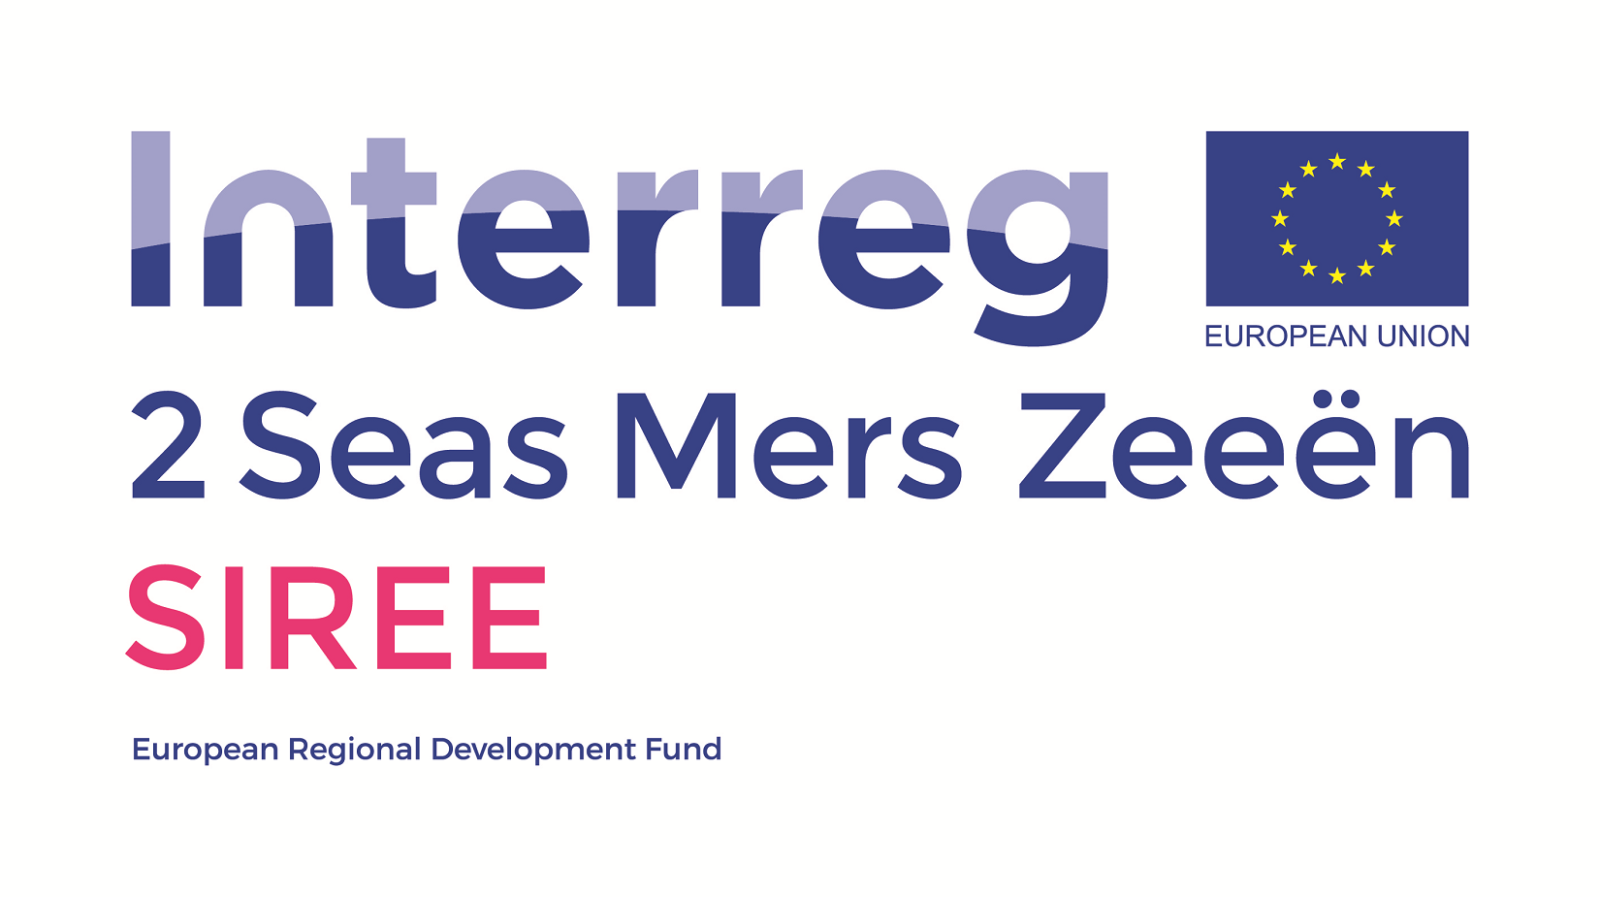 Interreg 2 Seas Mers Zeeën SIREE - European Regional Development Fund